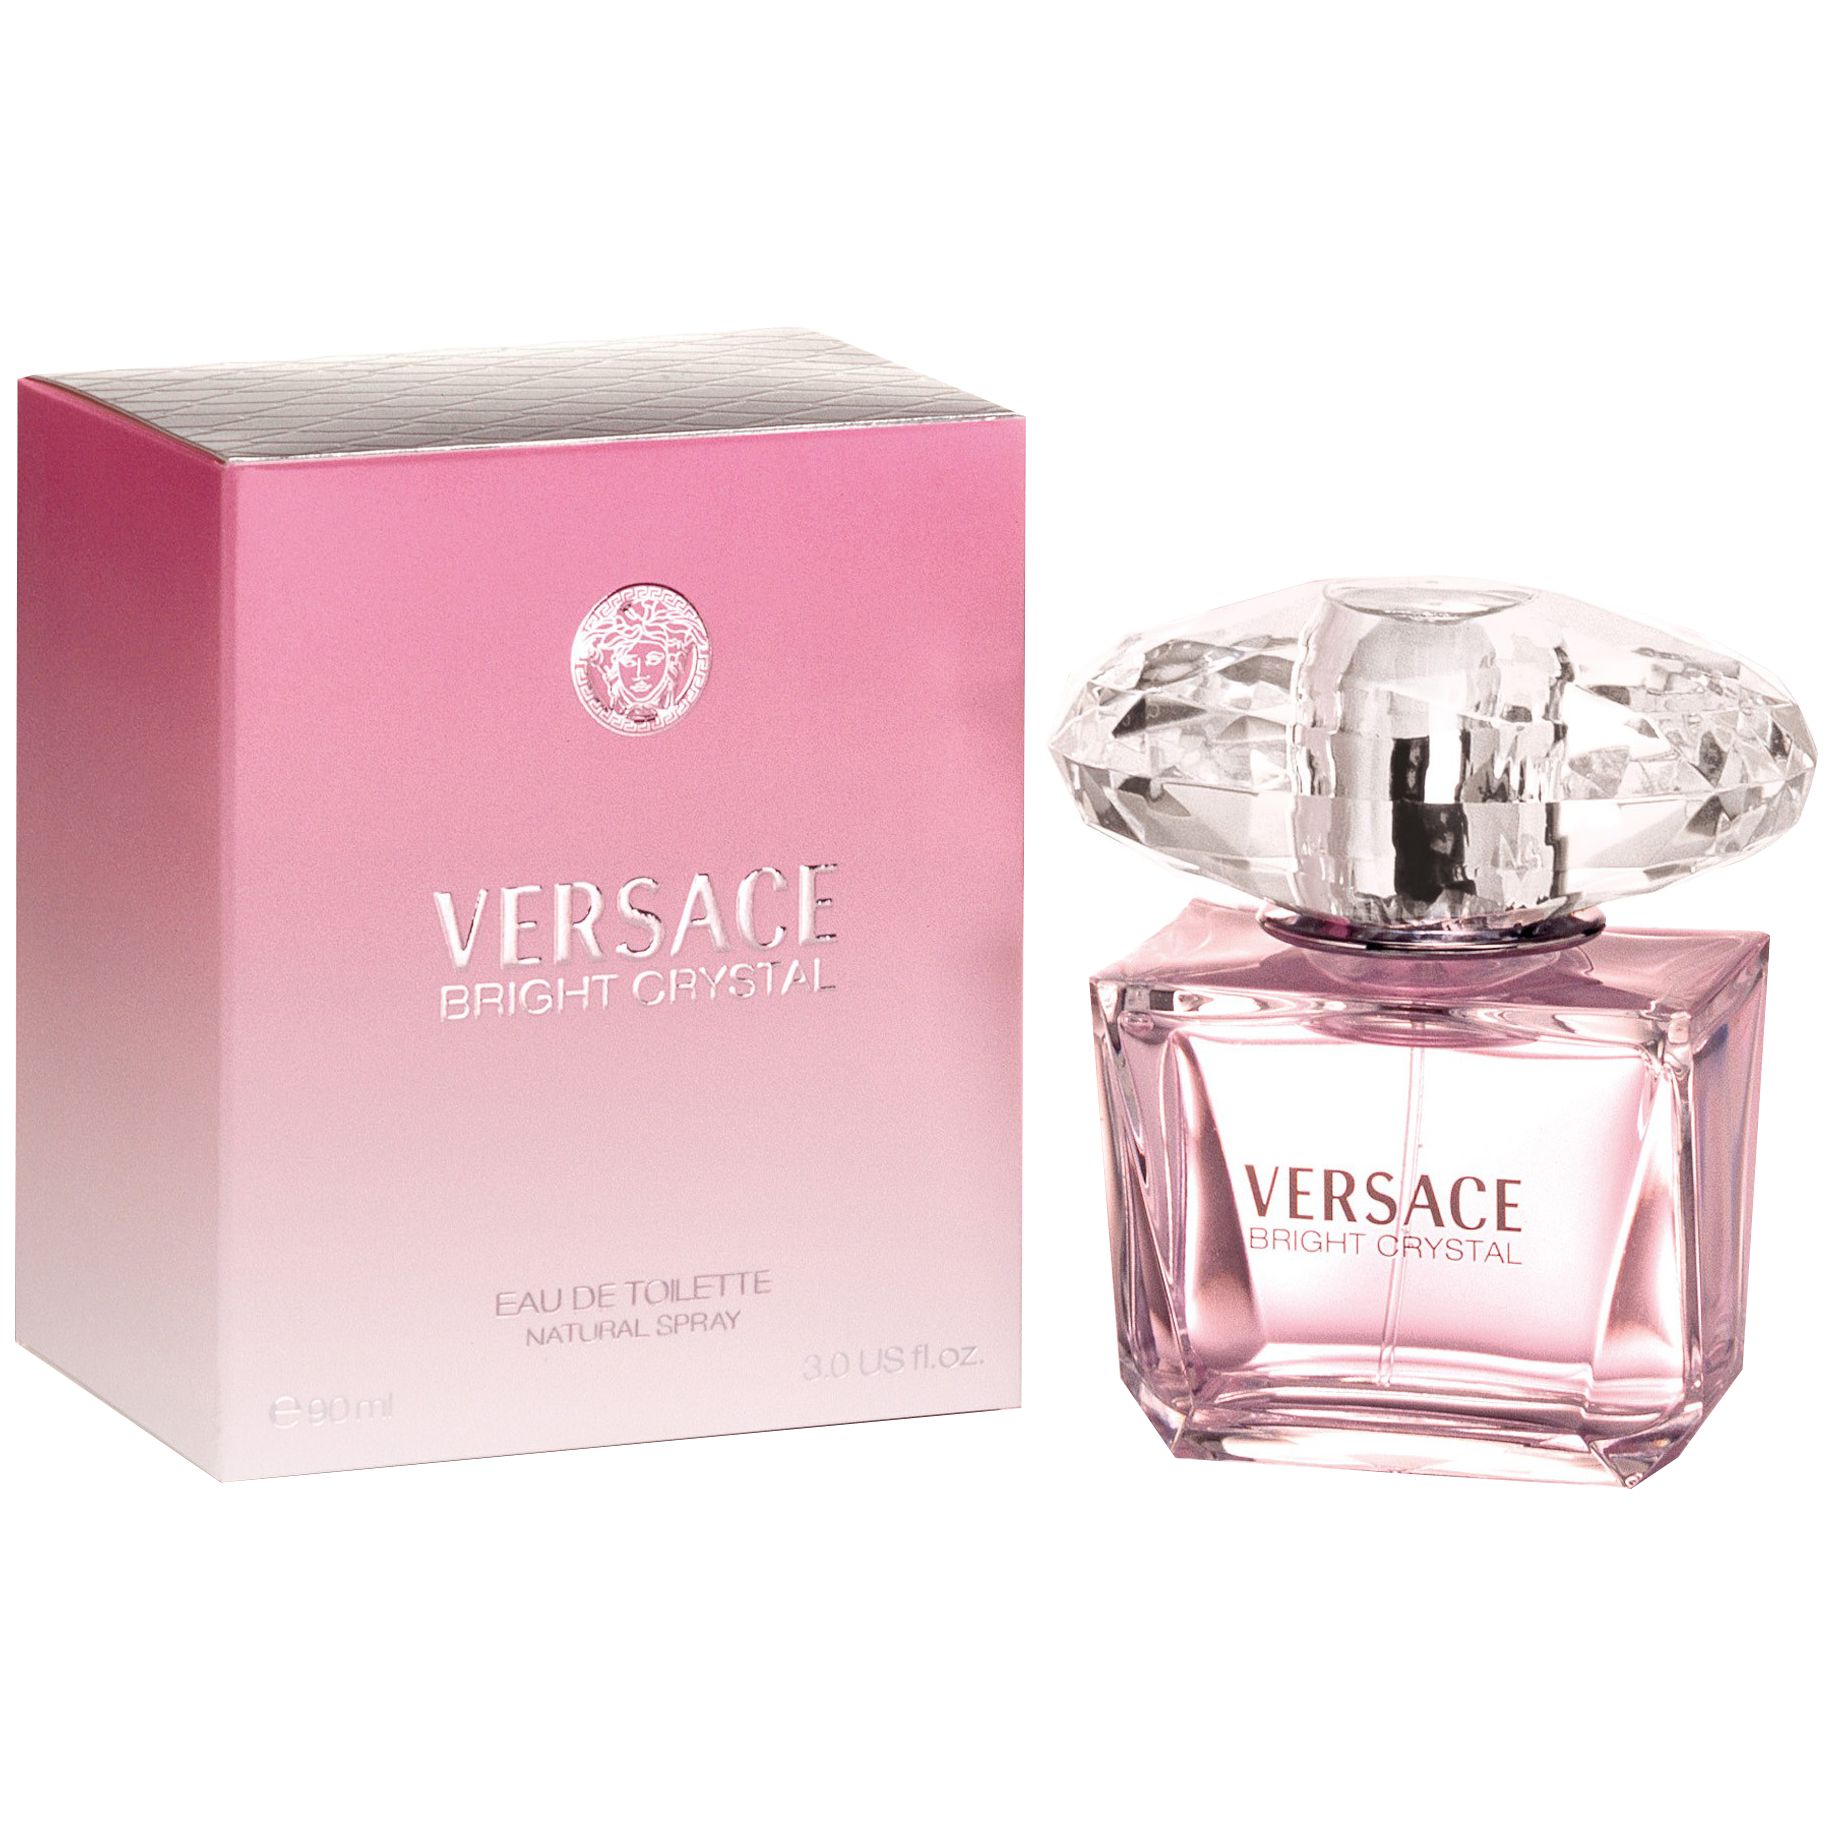 versace perfume 30ml price